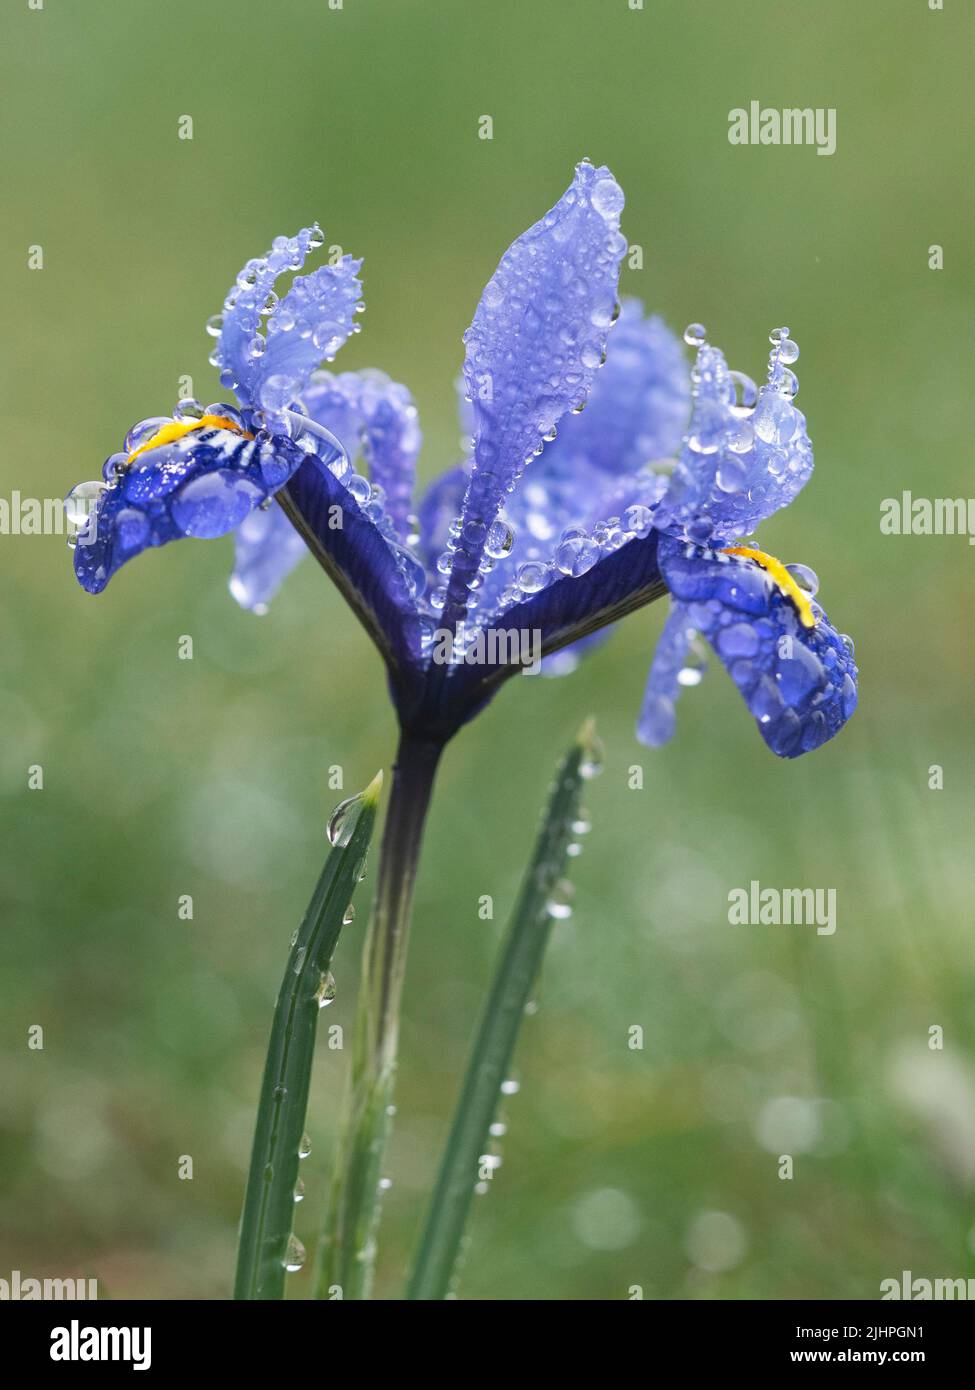 Iris flower (Iris sp.) after rain with water droplets, Garden, Kent UK Stock Photo